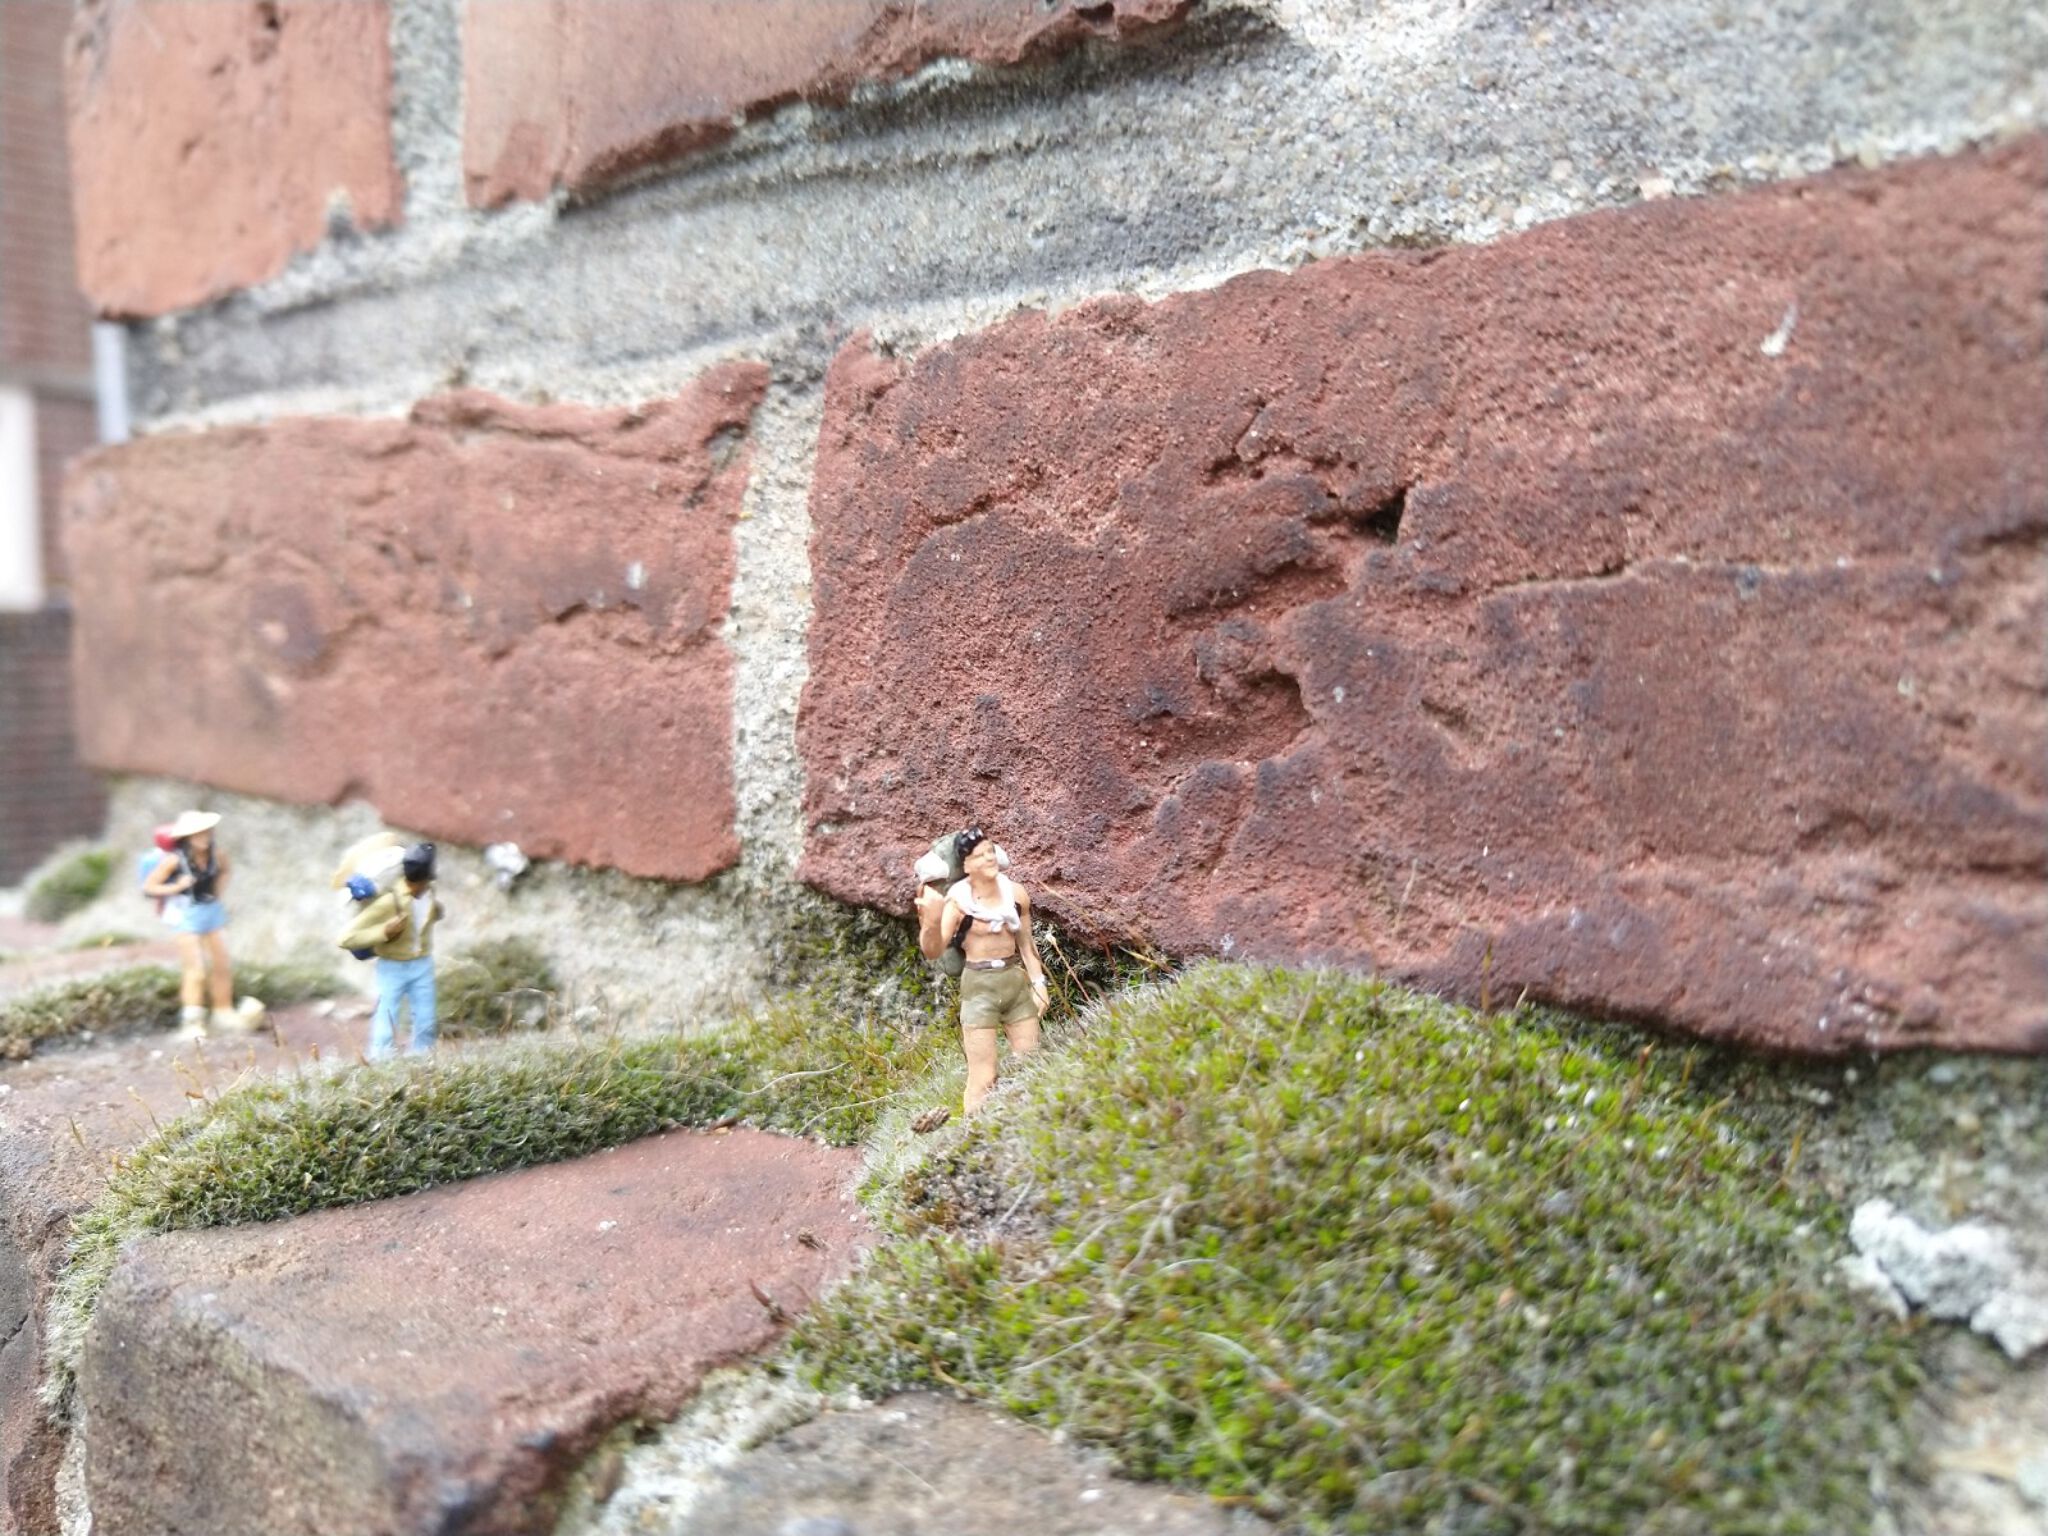 Miniature People Leeuwarden&mdash;The travellers